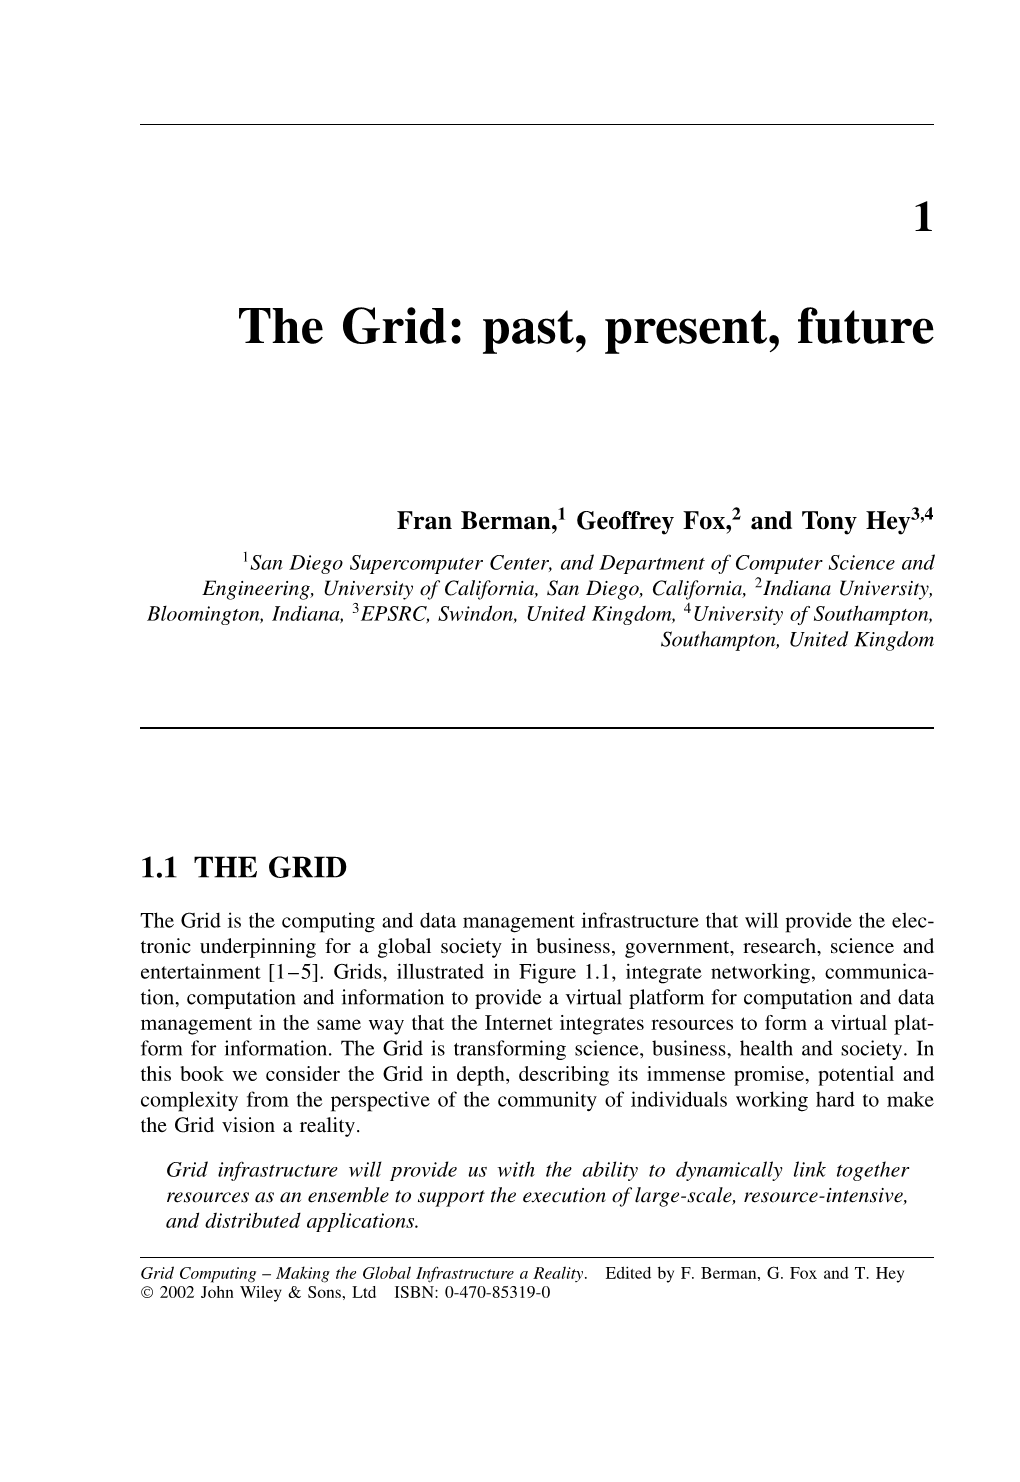 The Grid: Past, Present, Future